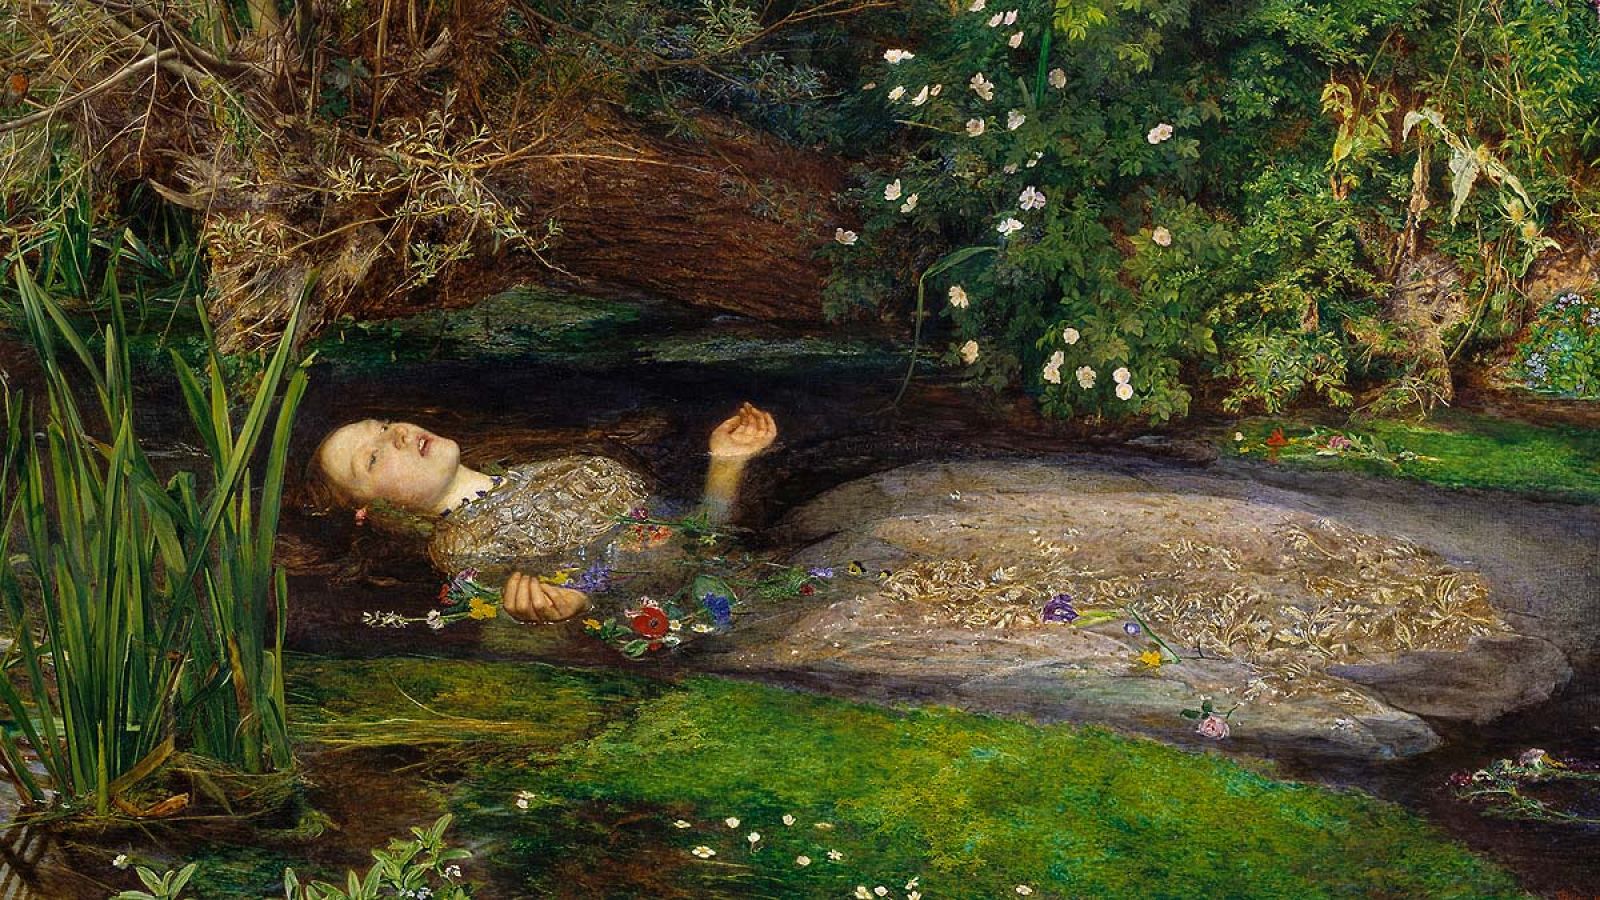 'Ophelia', John Everett Millais, 1851-52